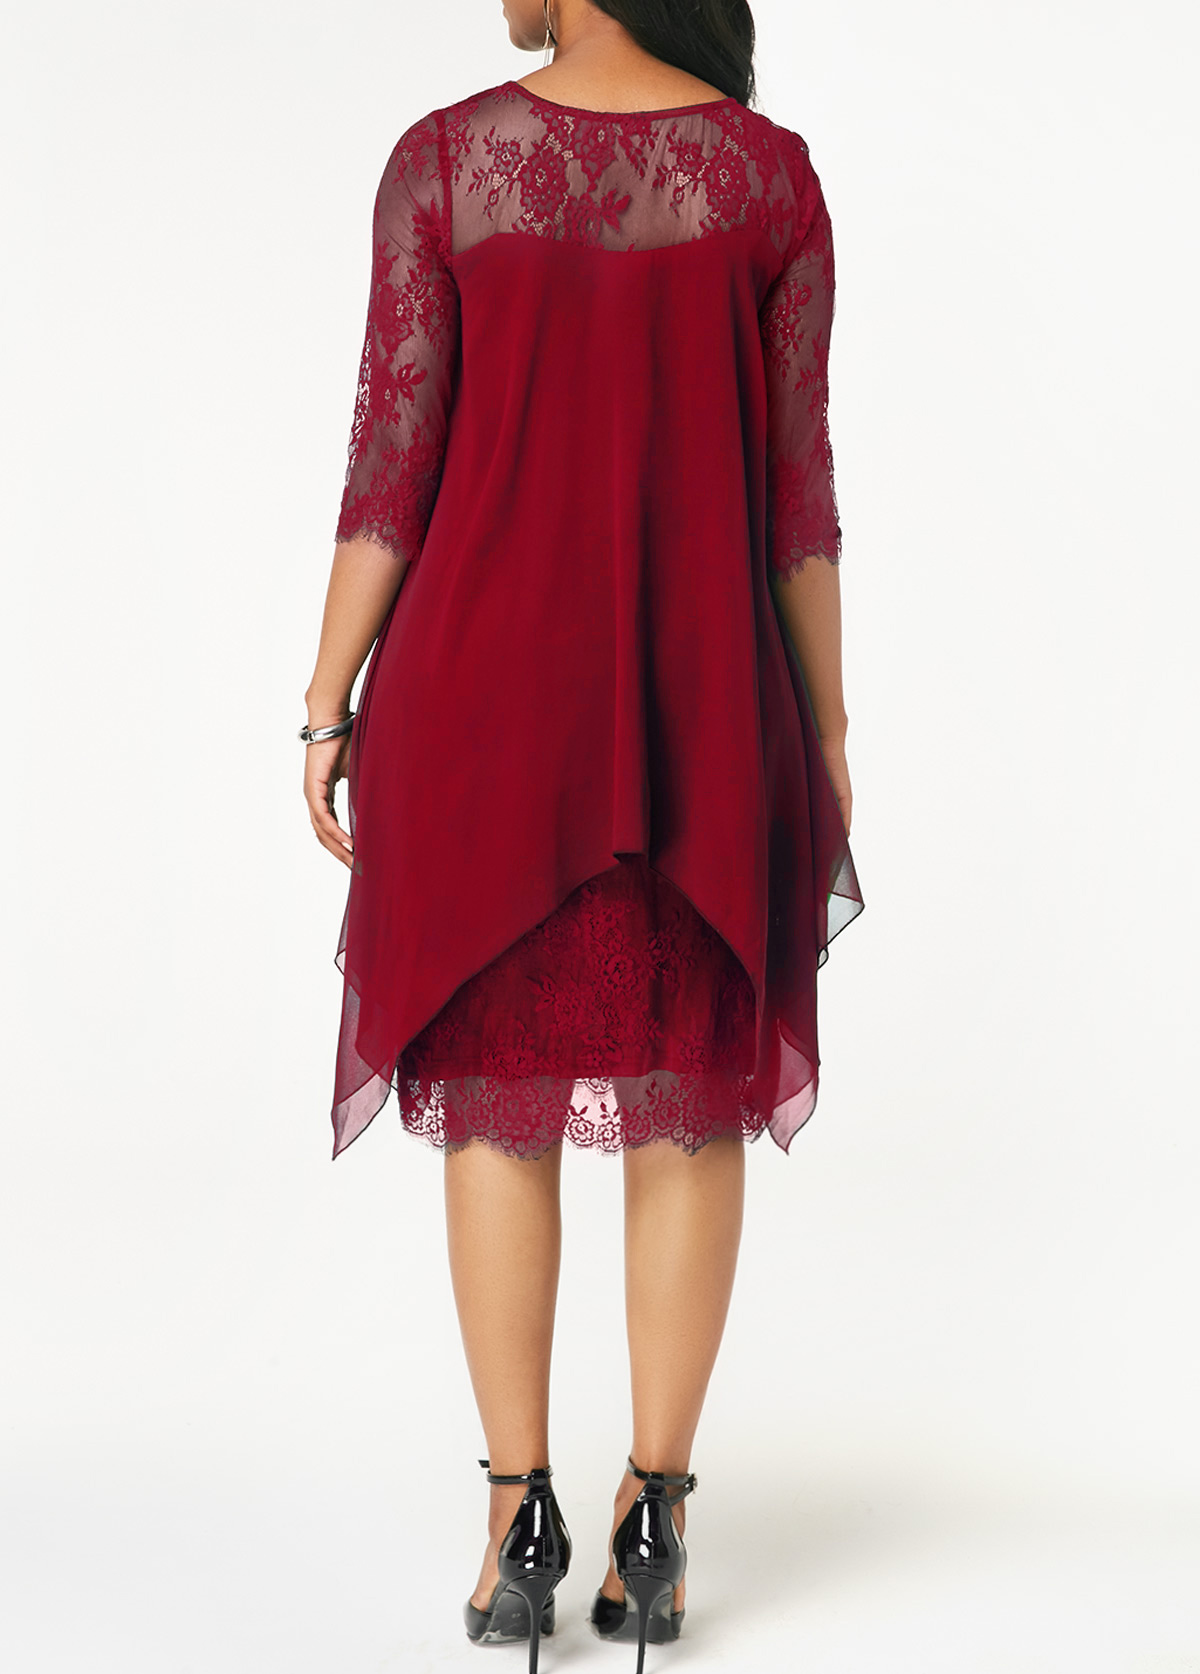 Round Neck Chiffon Overlay Lace Dress | modlily.com - USD 44.98